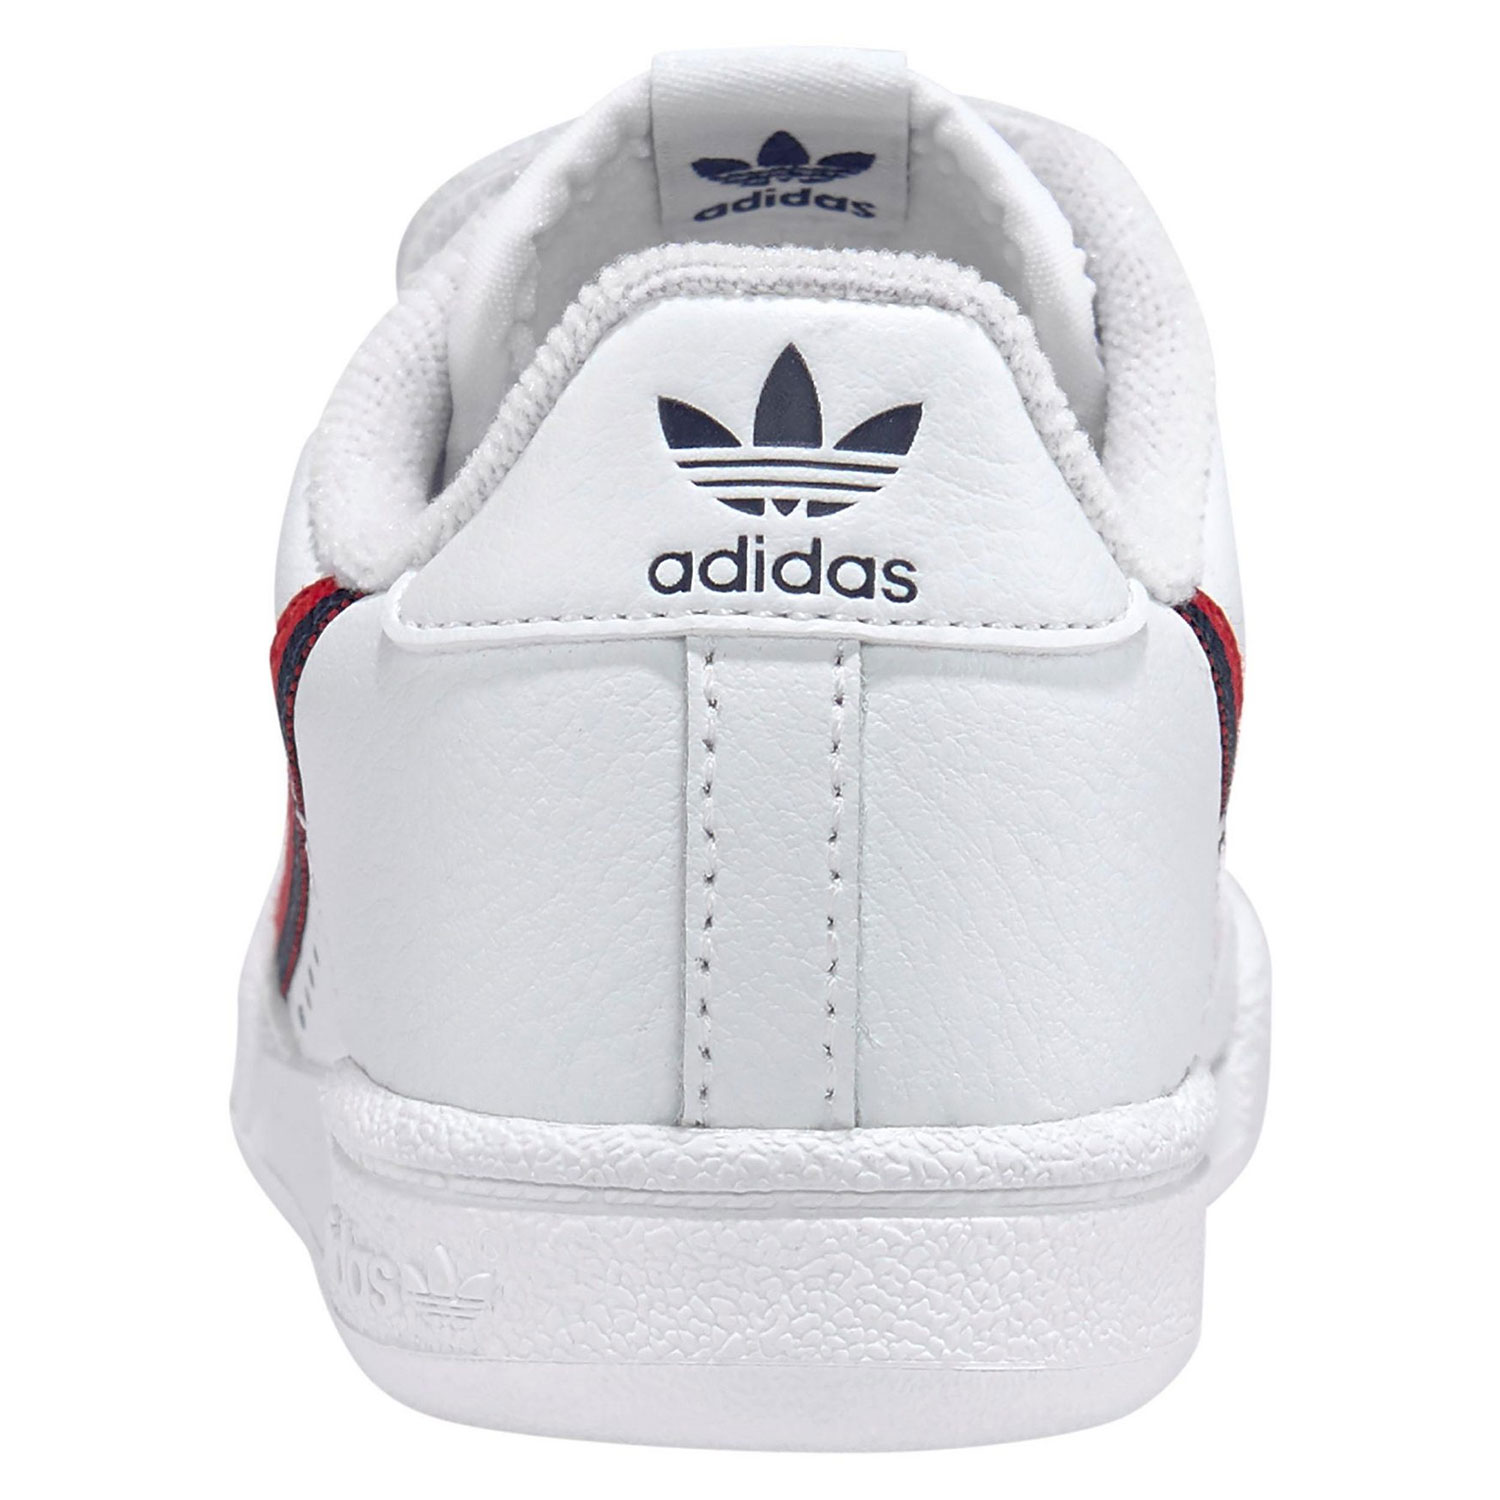 adidas Originals Continental 80 CF Kinder C weiß Sneaker